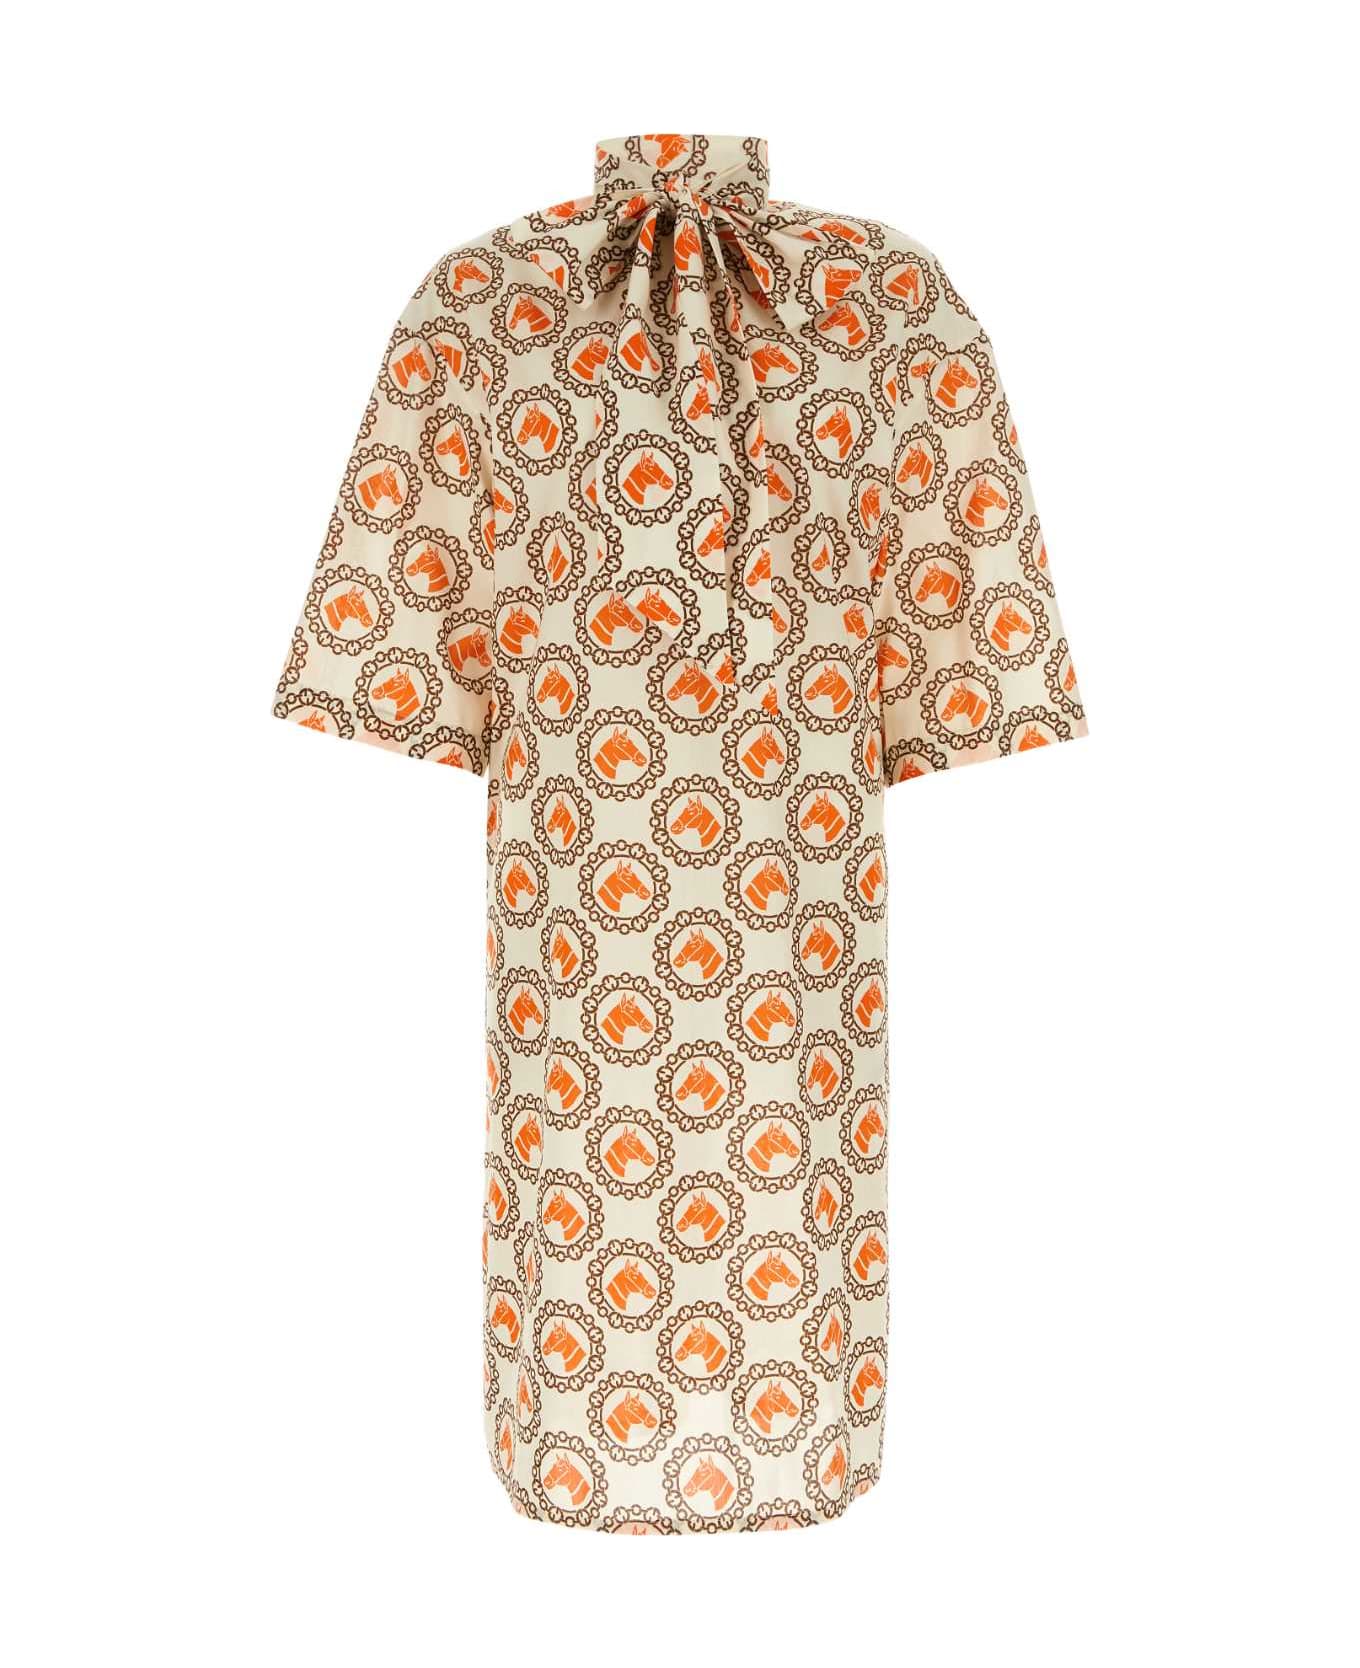 Gucci Printed Cotton Dress - IVORYORANGEMC